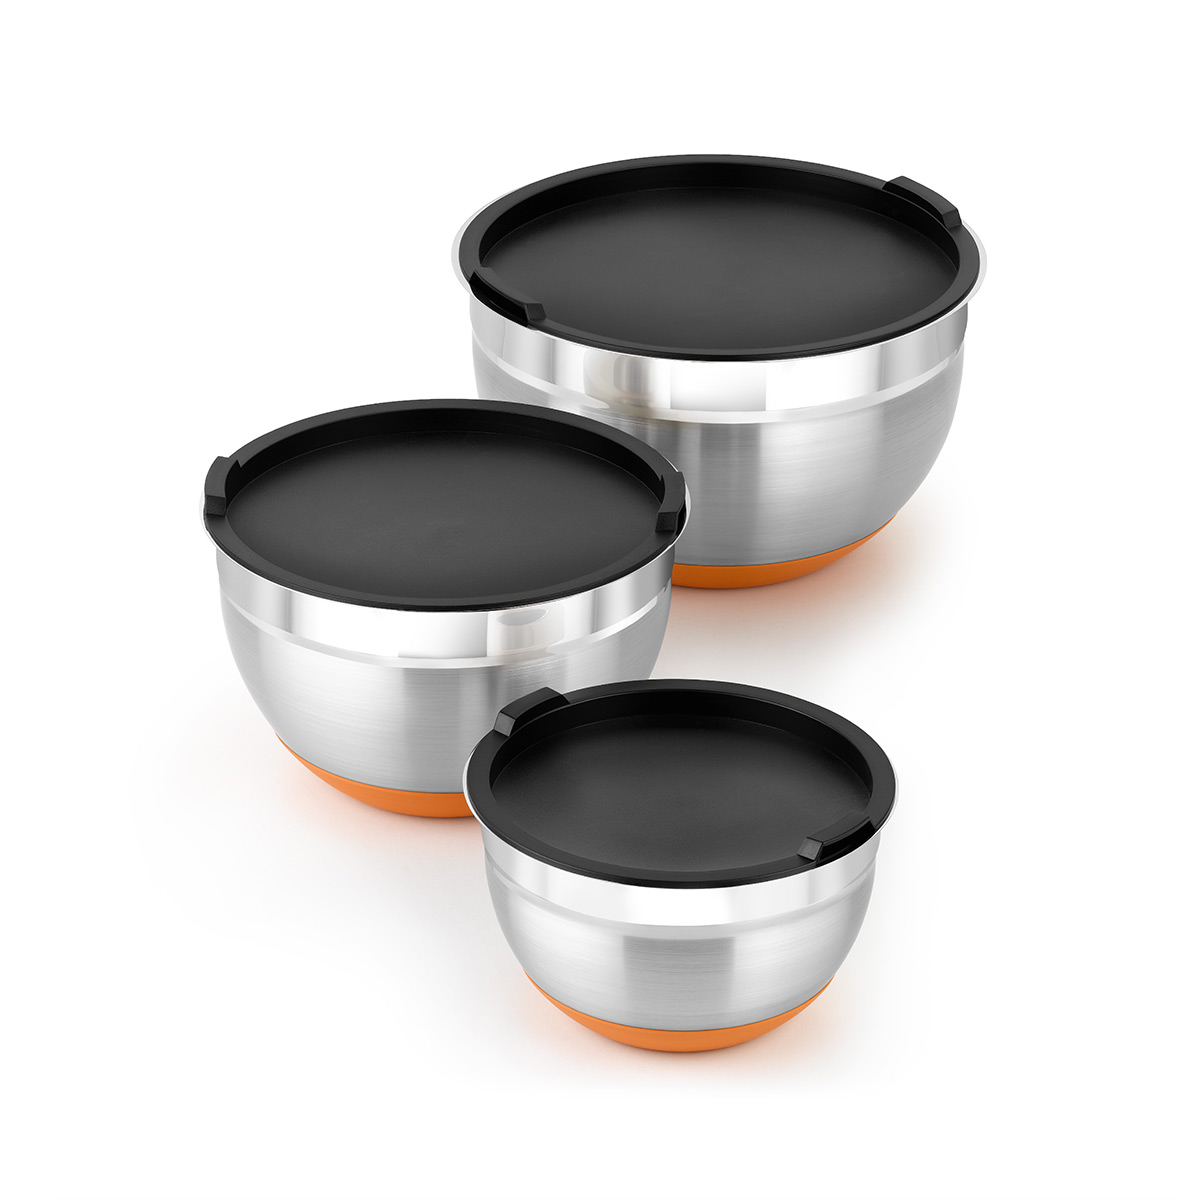 Bowls - bowl - bols de cocina - bol de cocina de acero